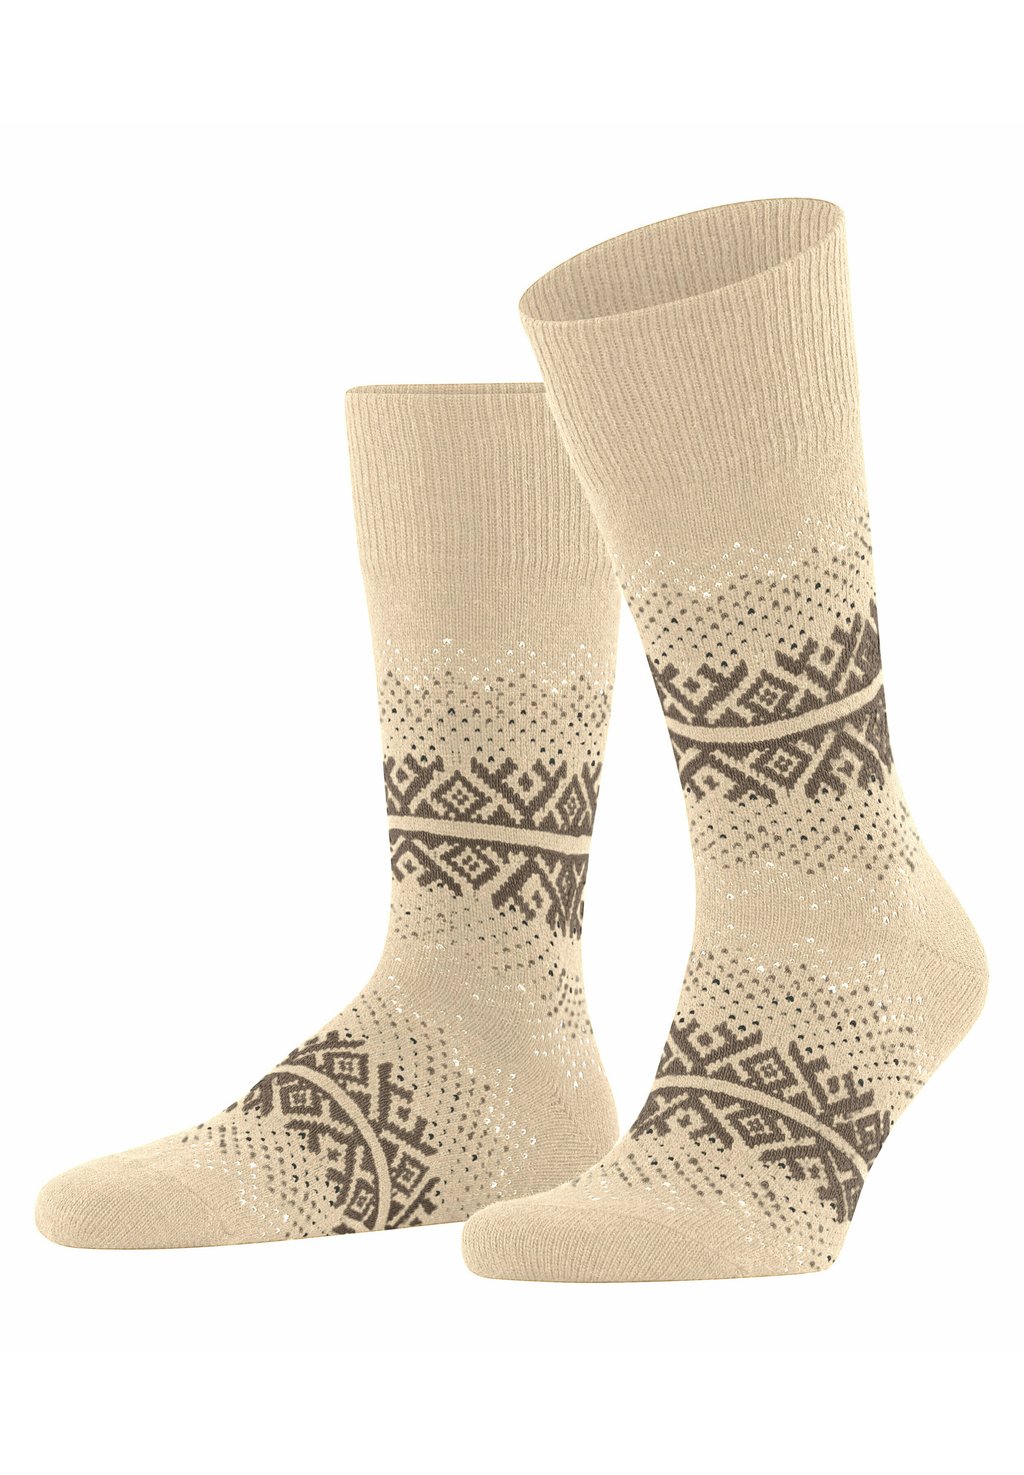 Спортивные носки INVERNESS FALKE, песчаник спортивные носки inverness falke песчаник